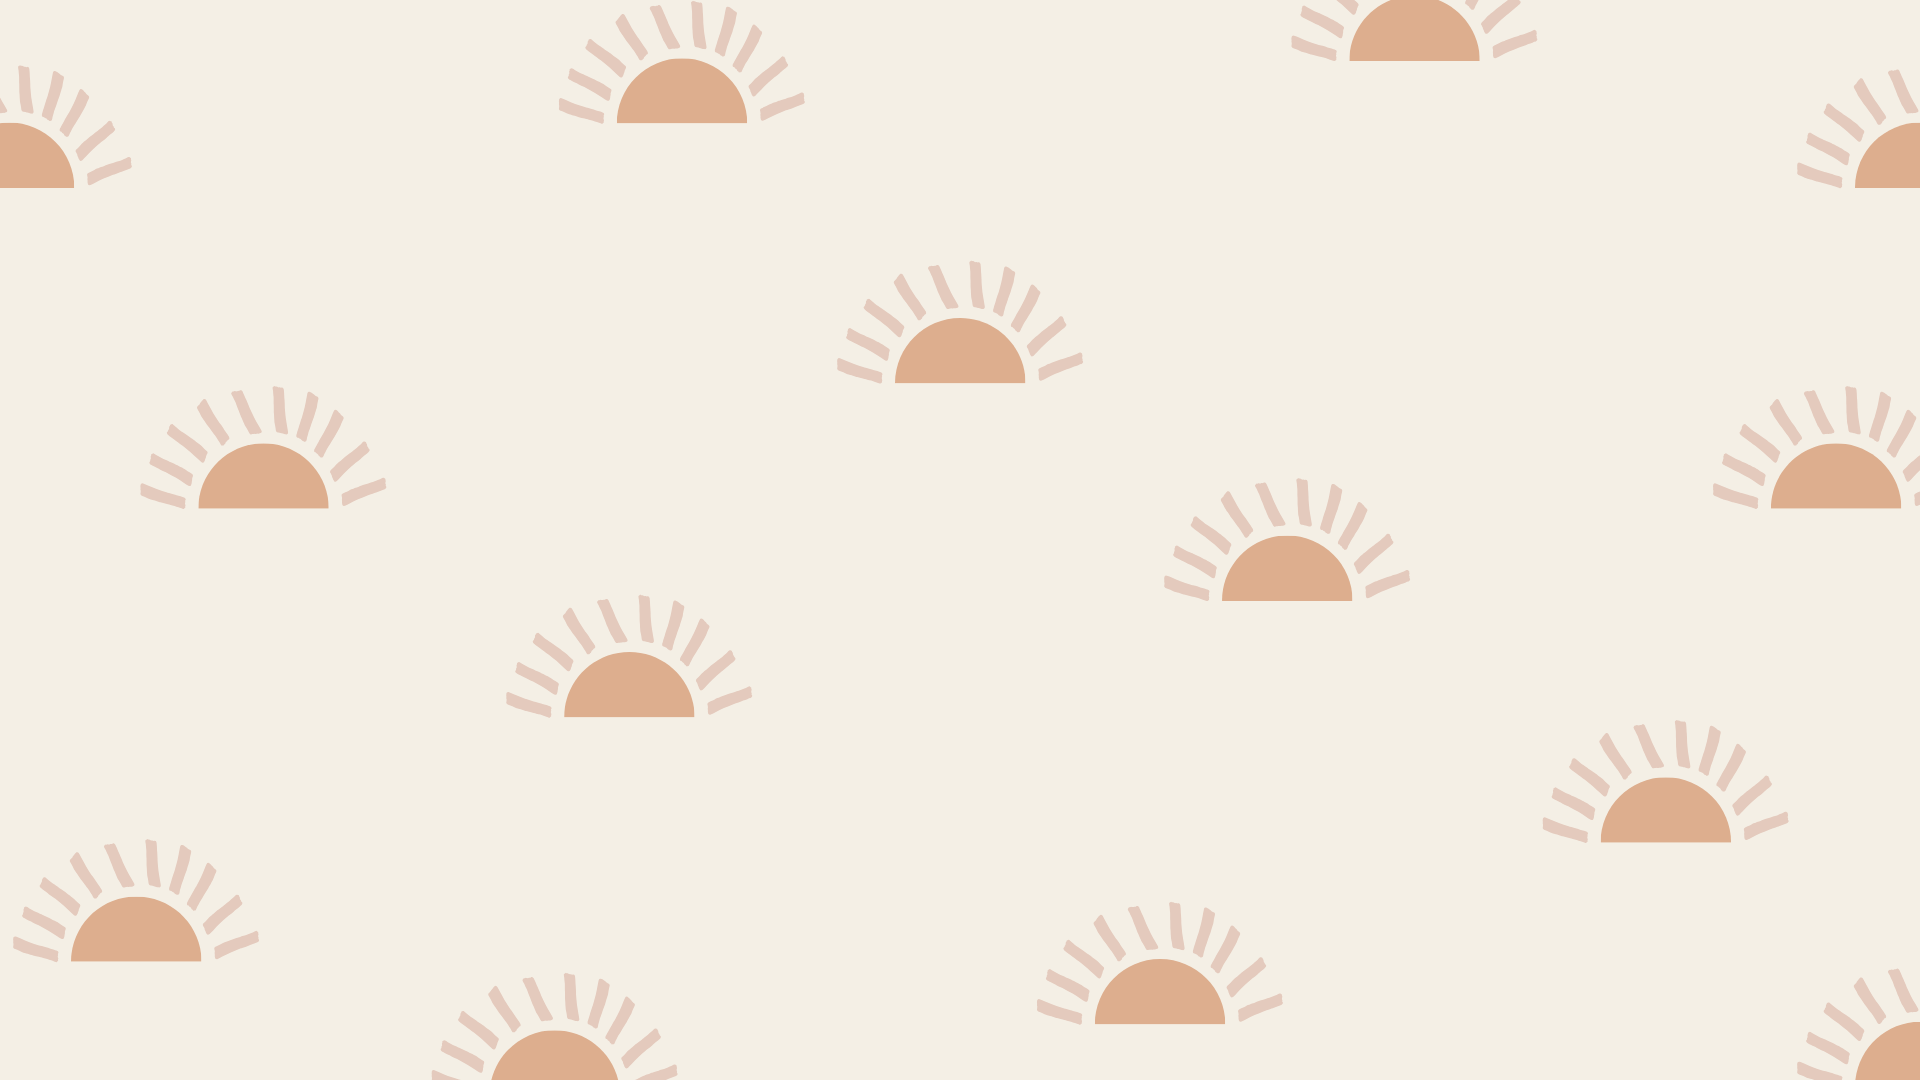 𝙴𝙳𝙸𝚃𝙴𝙳 𝙱𝚈 𝚁𝙴𝙸𝙽𝙳𝙴𝙴𝚁  𝙽𝙾𝚃 𝙼𝚈 𝙿𝙸𝙲  Wallpaper iphone  boho Dots wallpaper Aesthetic backgrounds